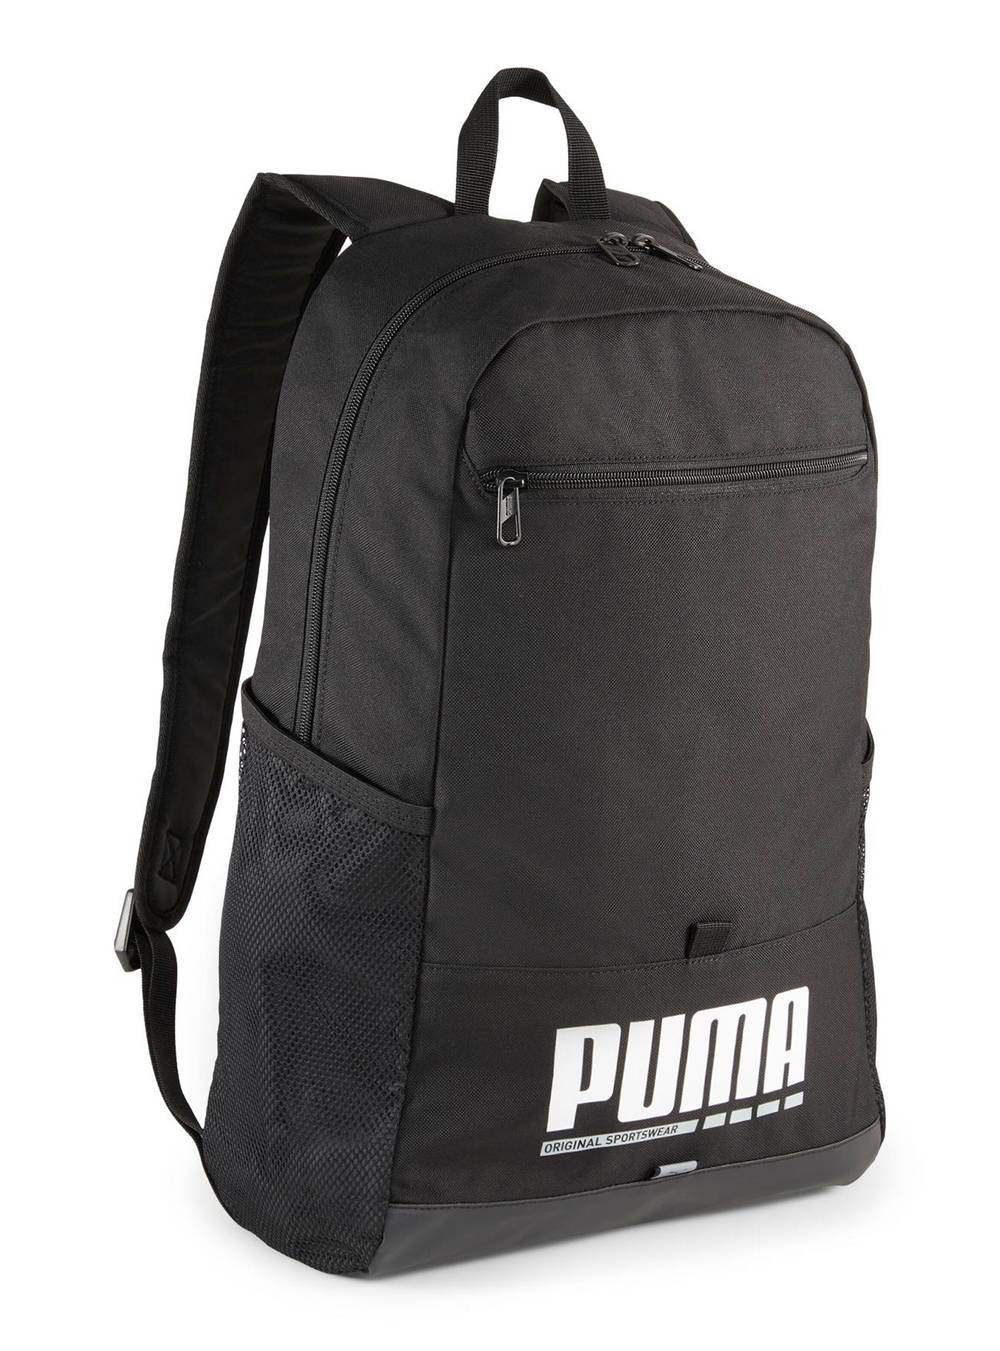 Puma mochila urbana design plus backpack (standar/negro)